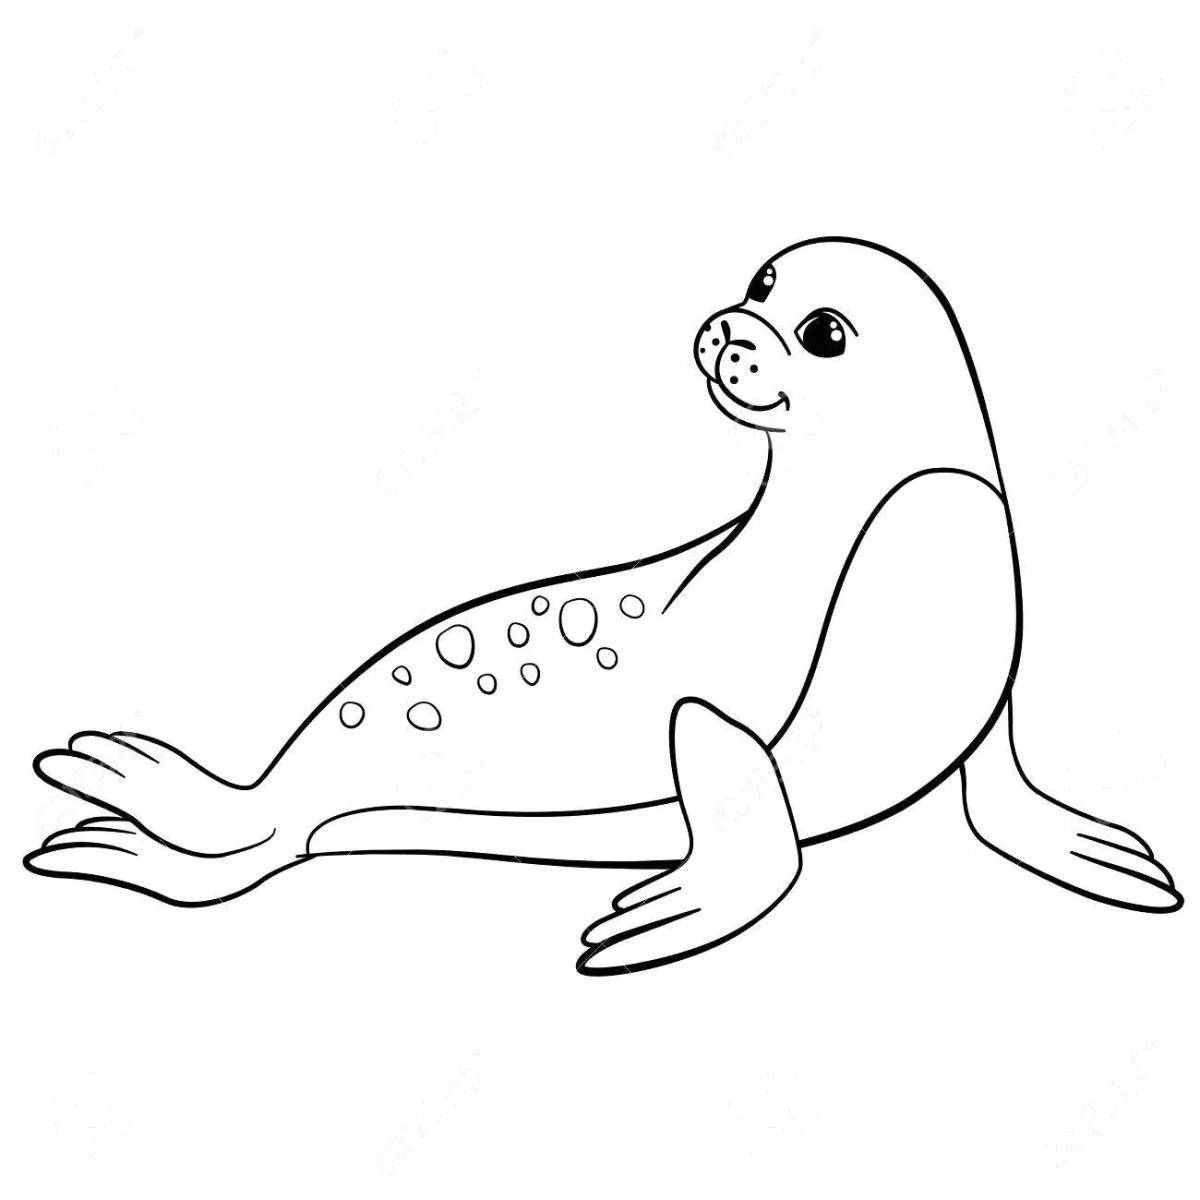 Magic Baikal seal coloring book for kids